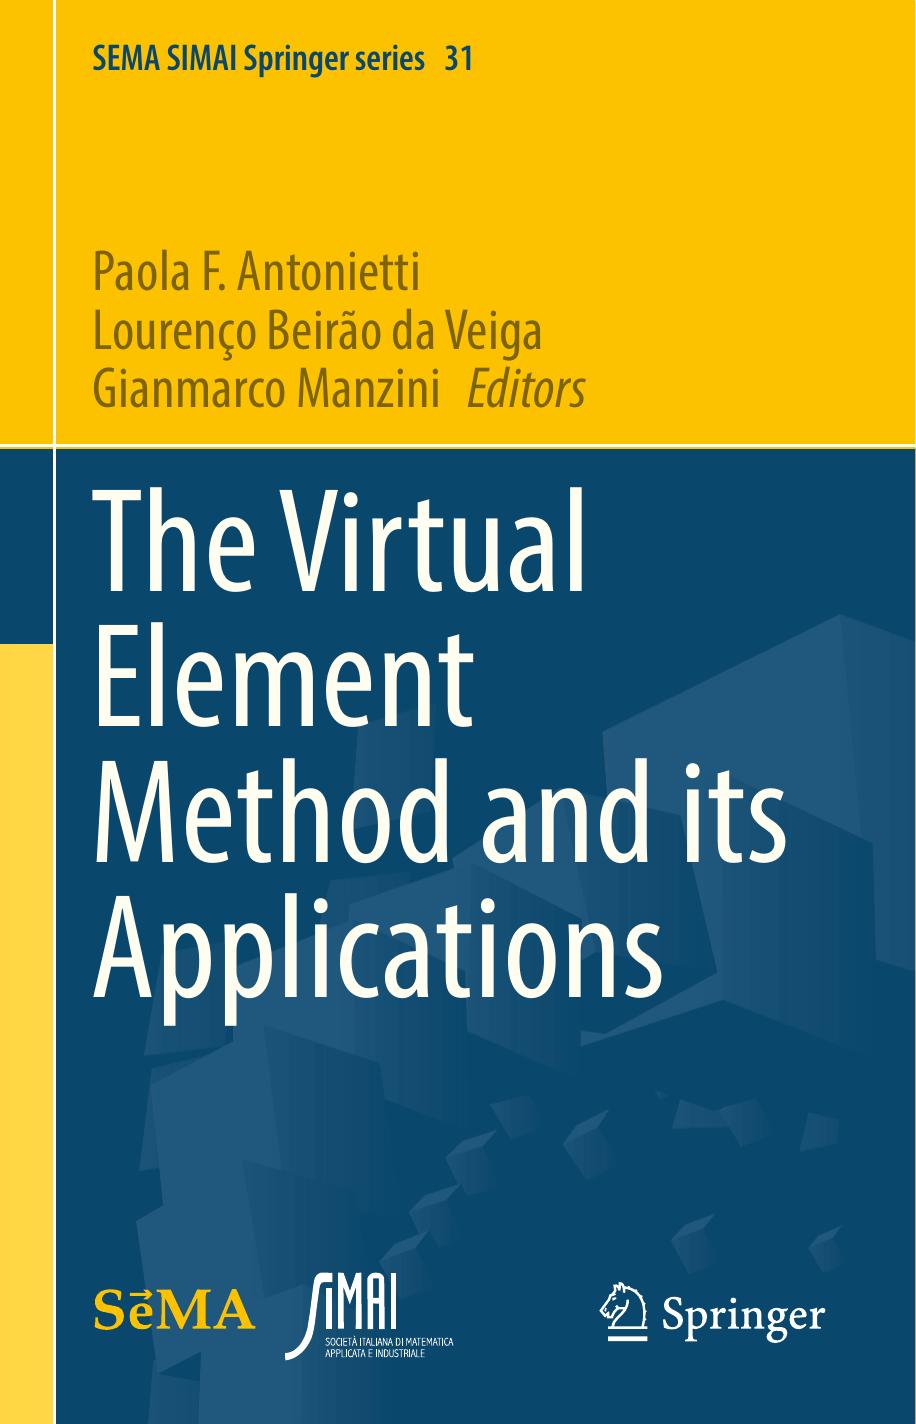 The Virtual Element Method and its Applications by Paola F. Antonietti Lourenço Beirão da Veiga Gianmarco Manzini